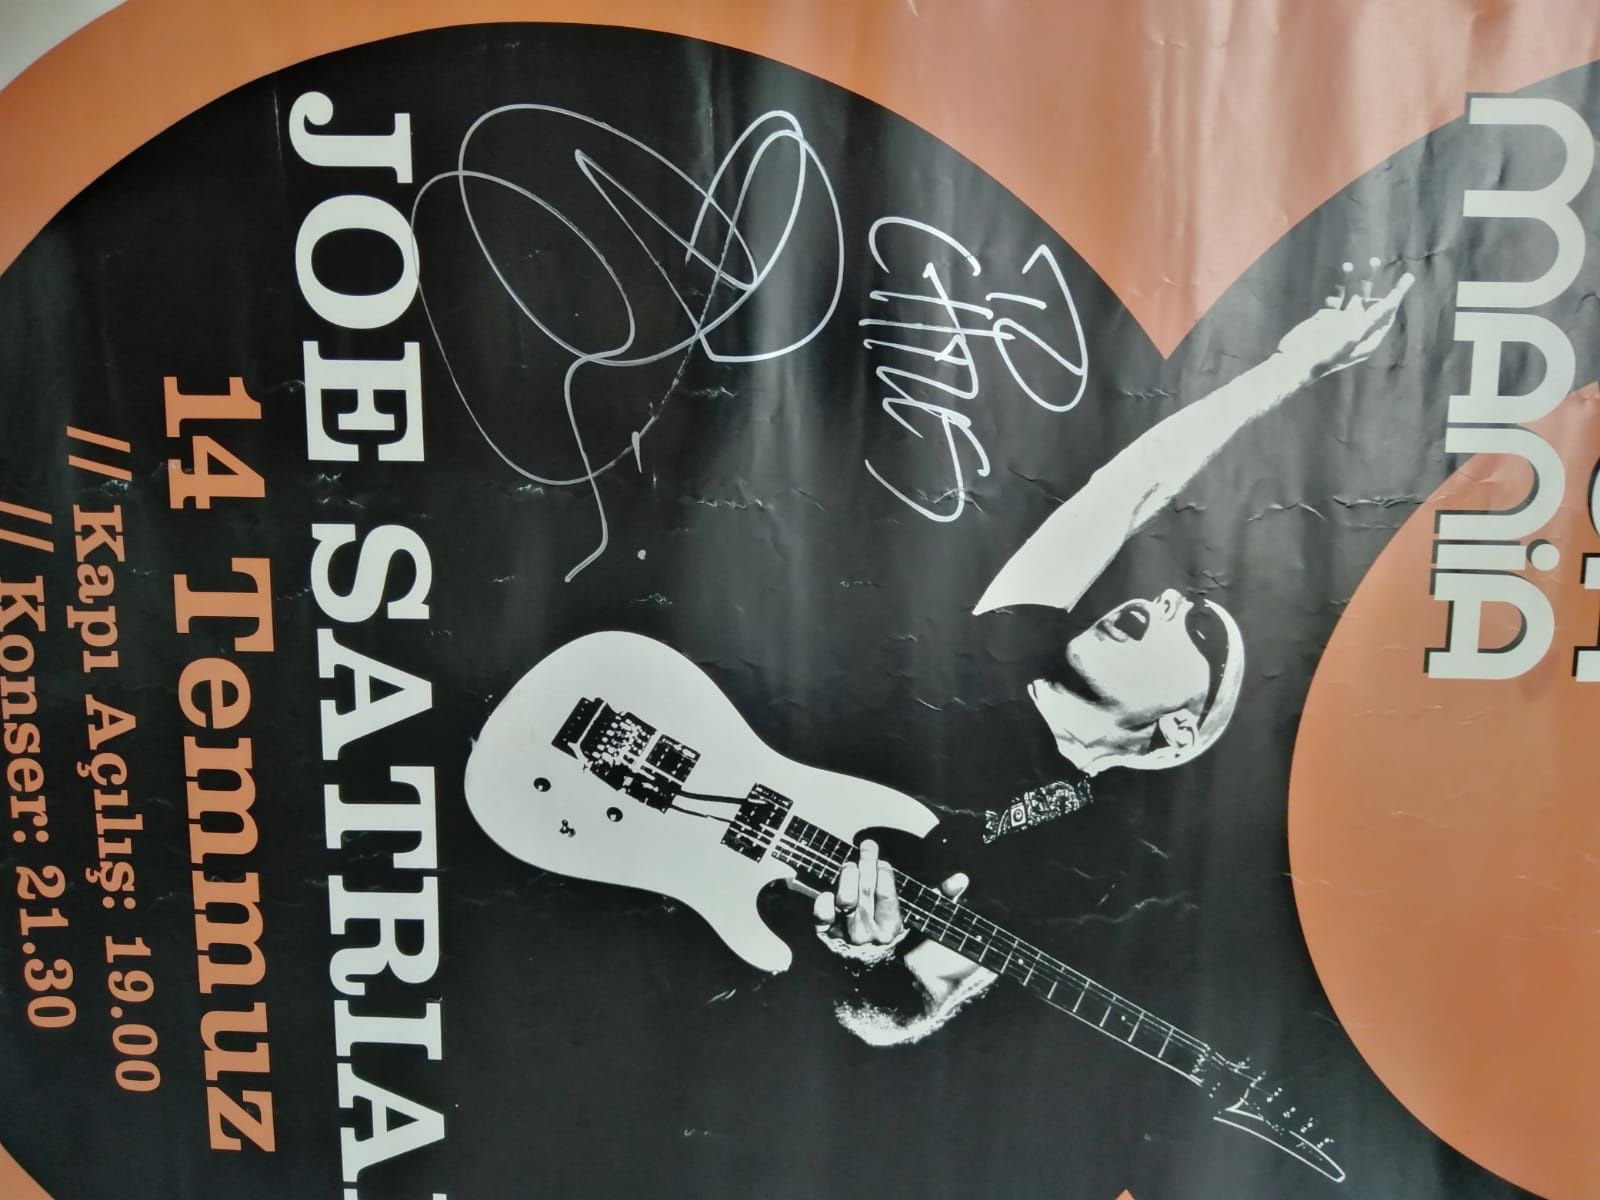 Vand poster JOE Satriani si albumul FLYING IN A BLUE DREAM cu autograf